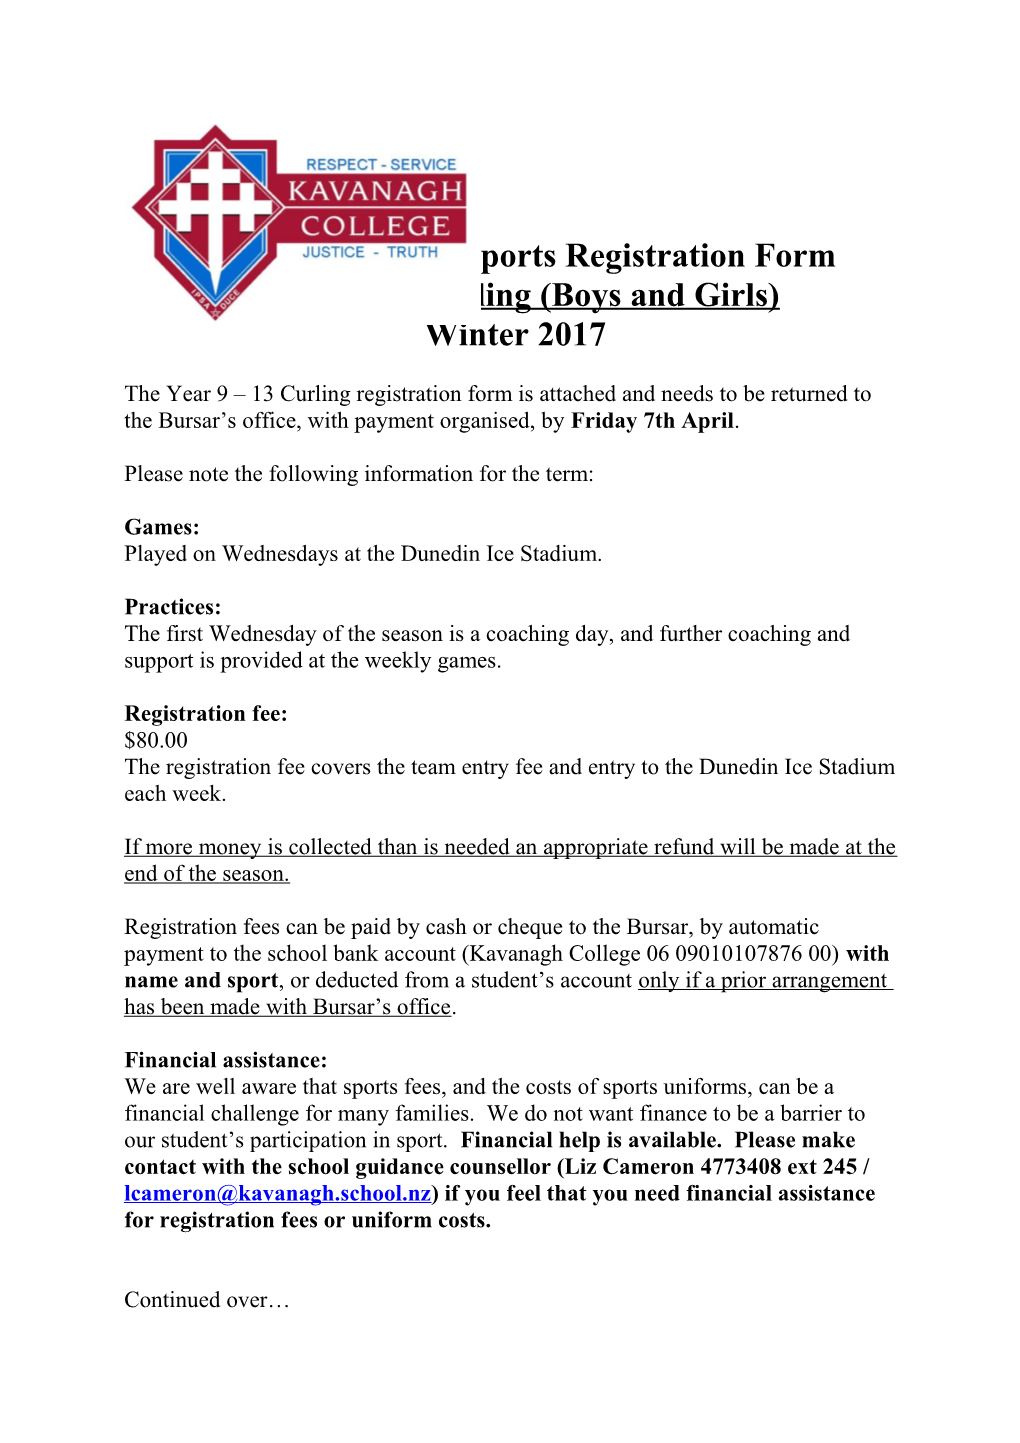 Kavanagh College Sports Registration Form